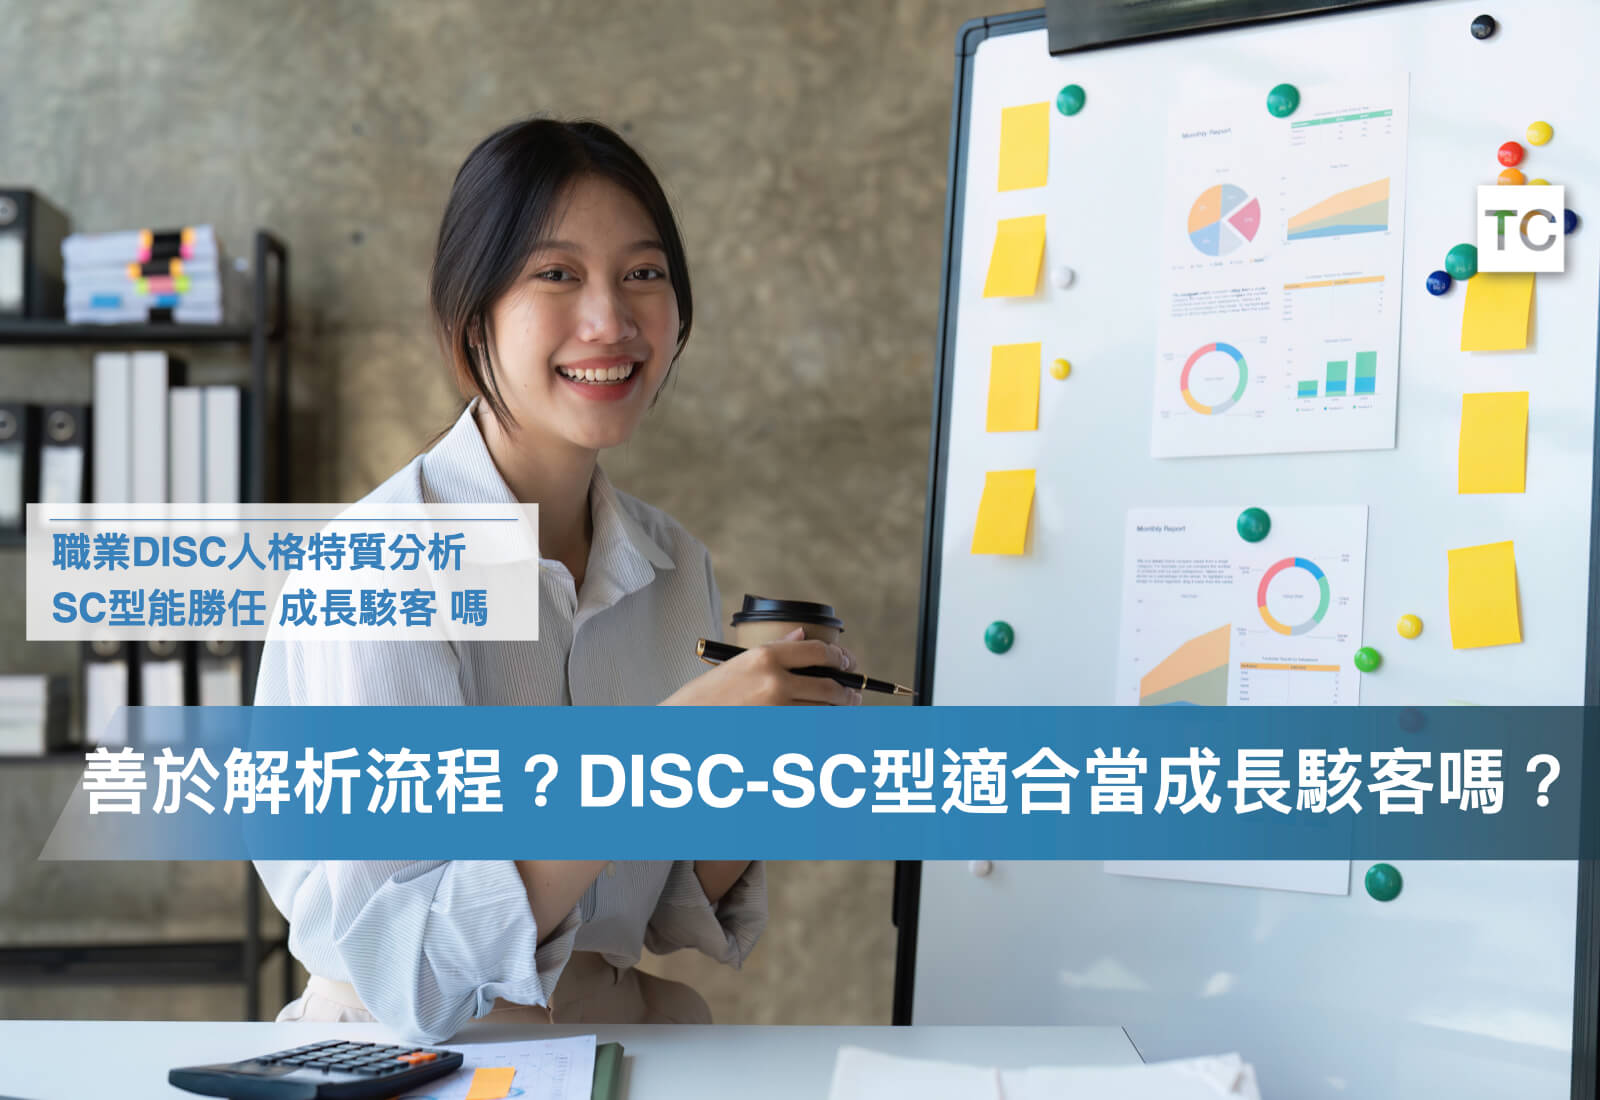 DISC-SC(無尾熊/貓頭鷹)型，職業人格特質分析，實習/工作選擇成長駭客的人格優缺點分析